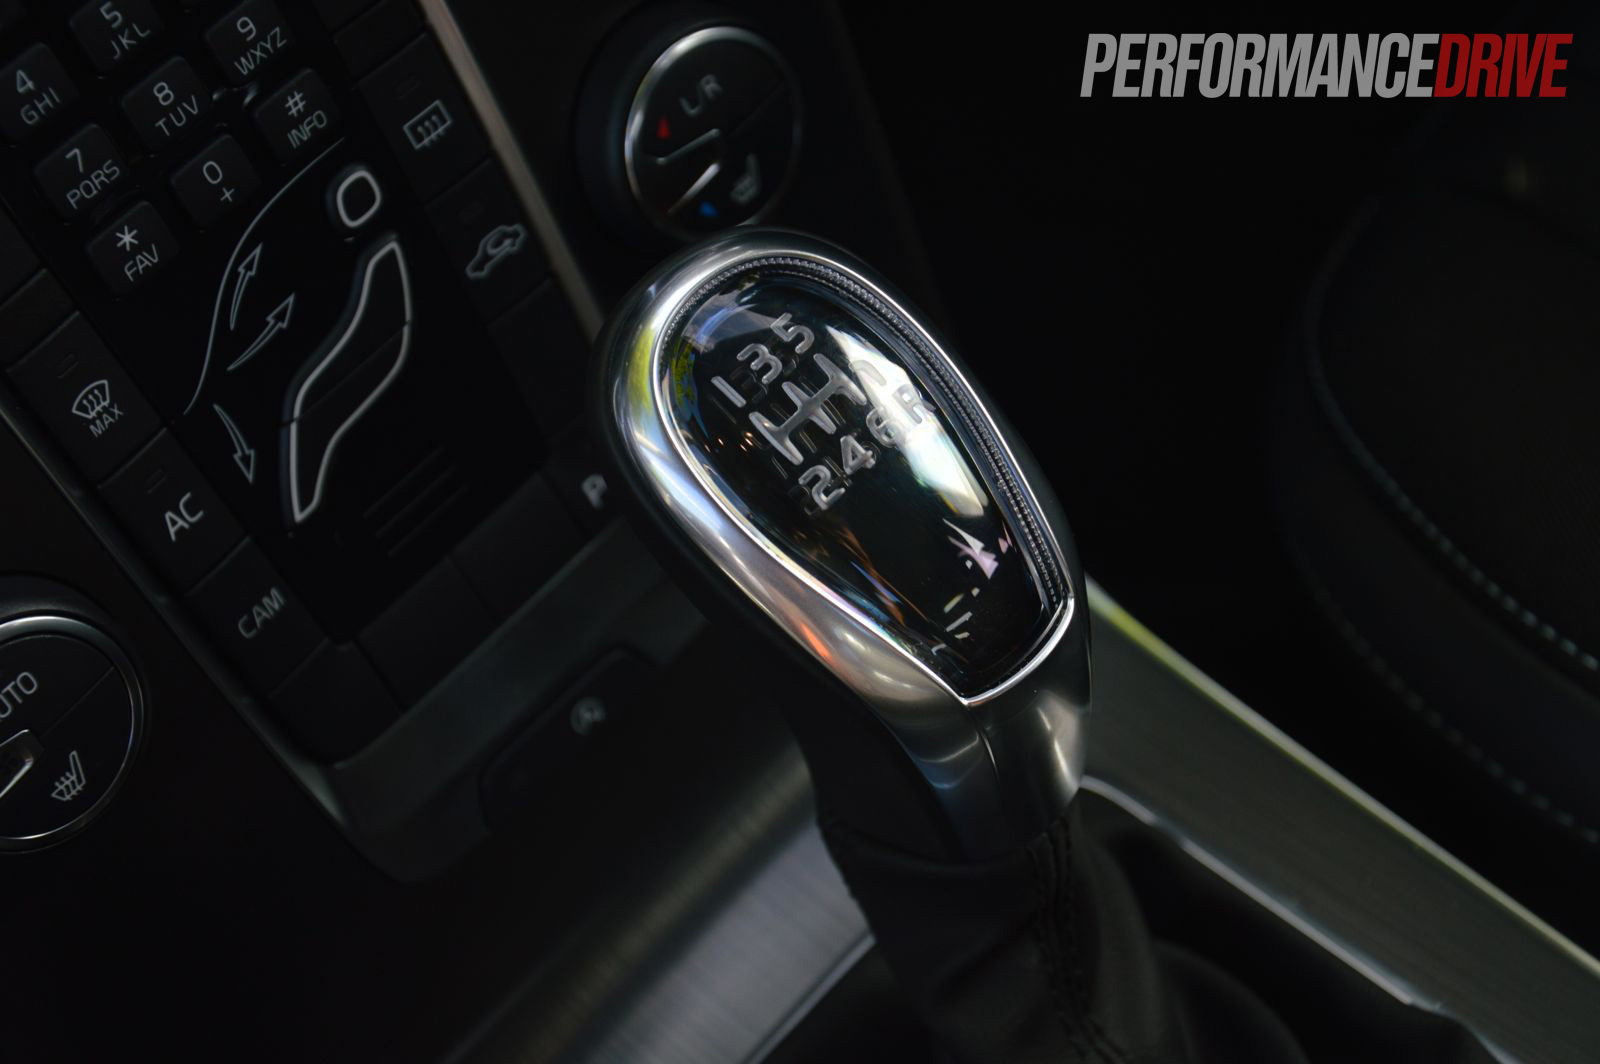 2013 Volvo V40 D4 manual transmission